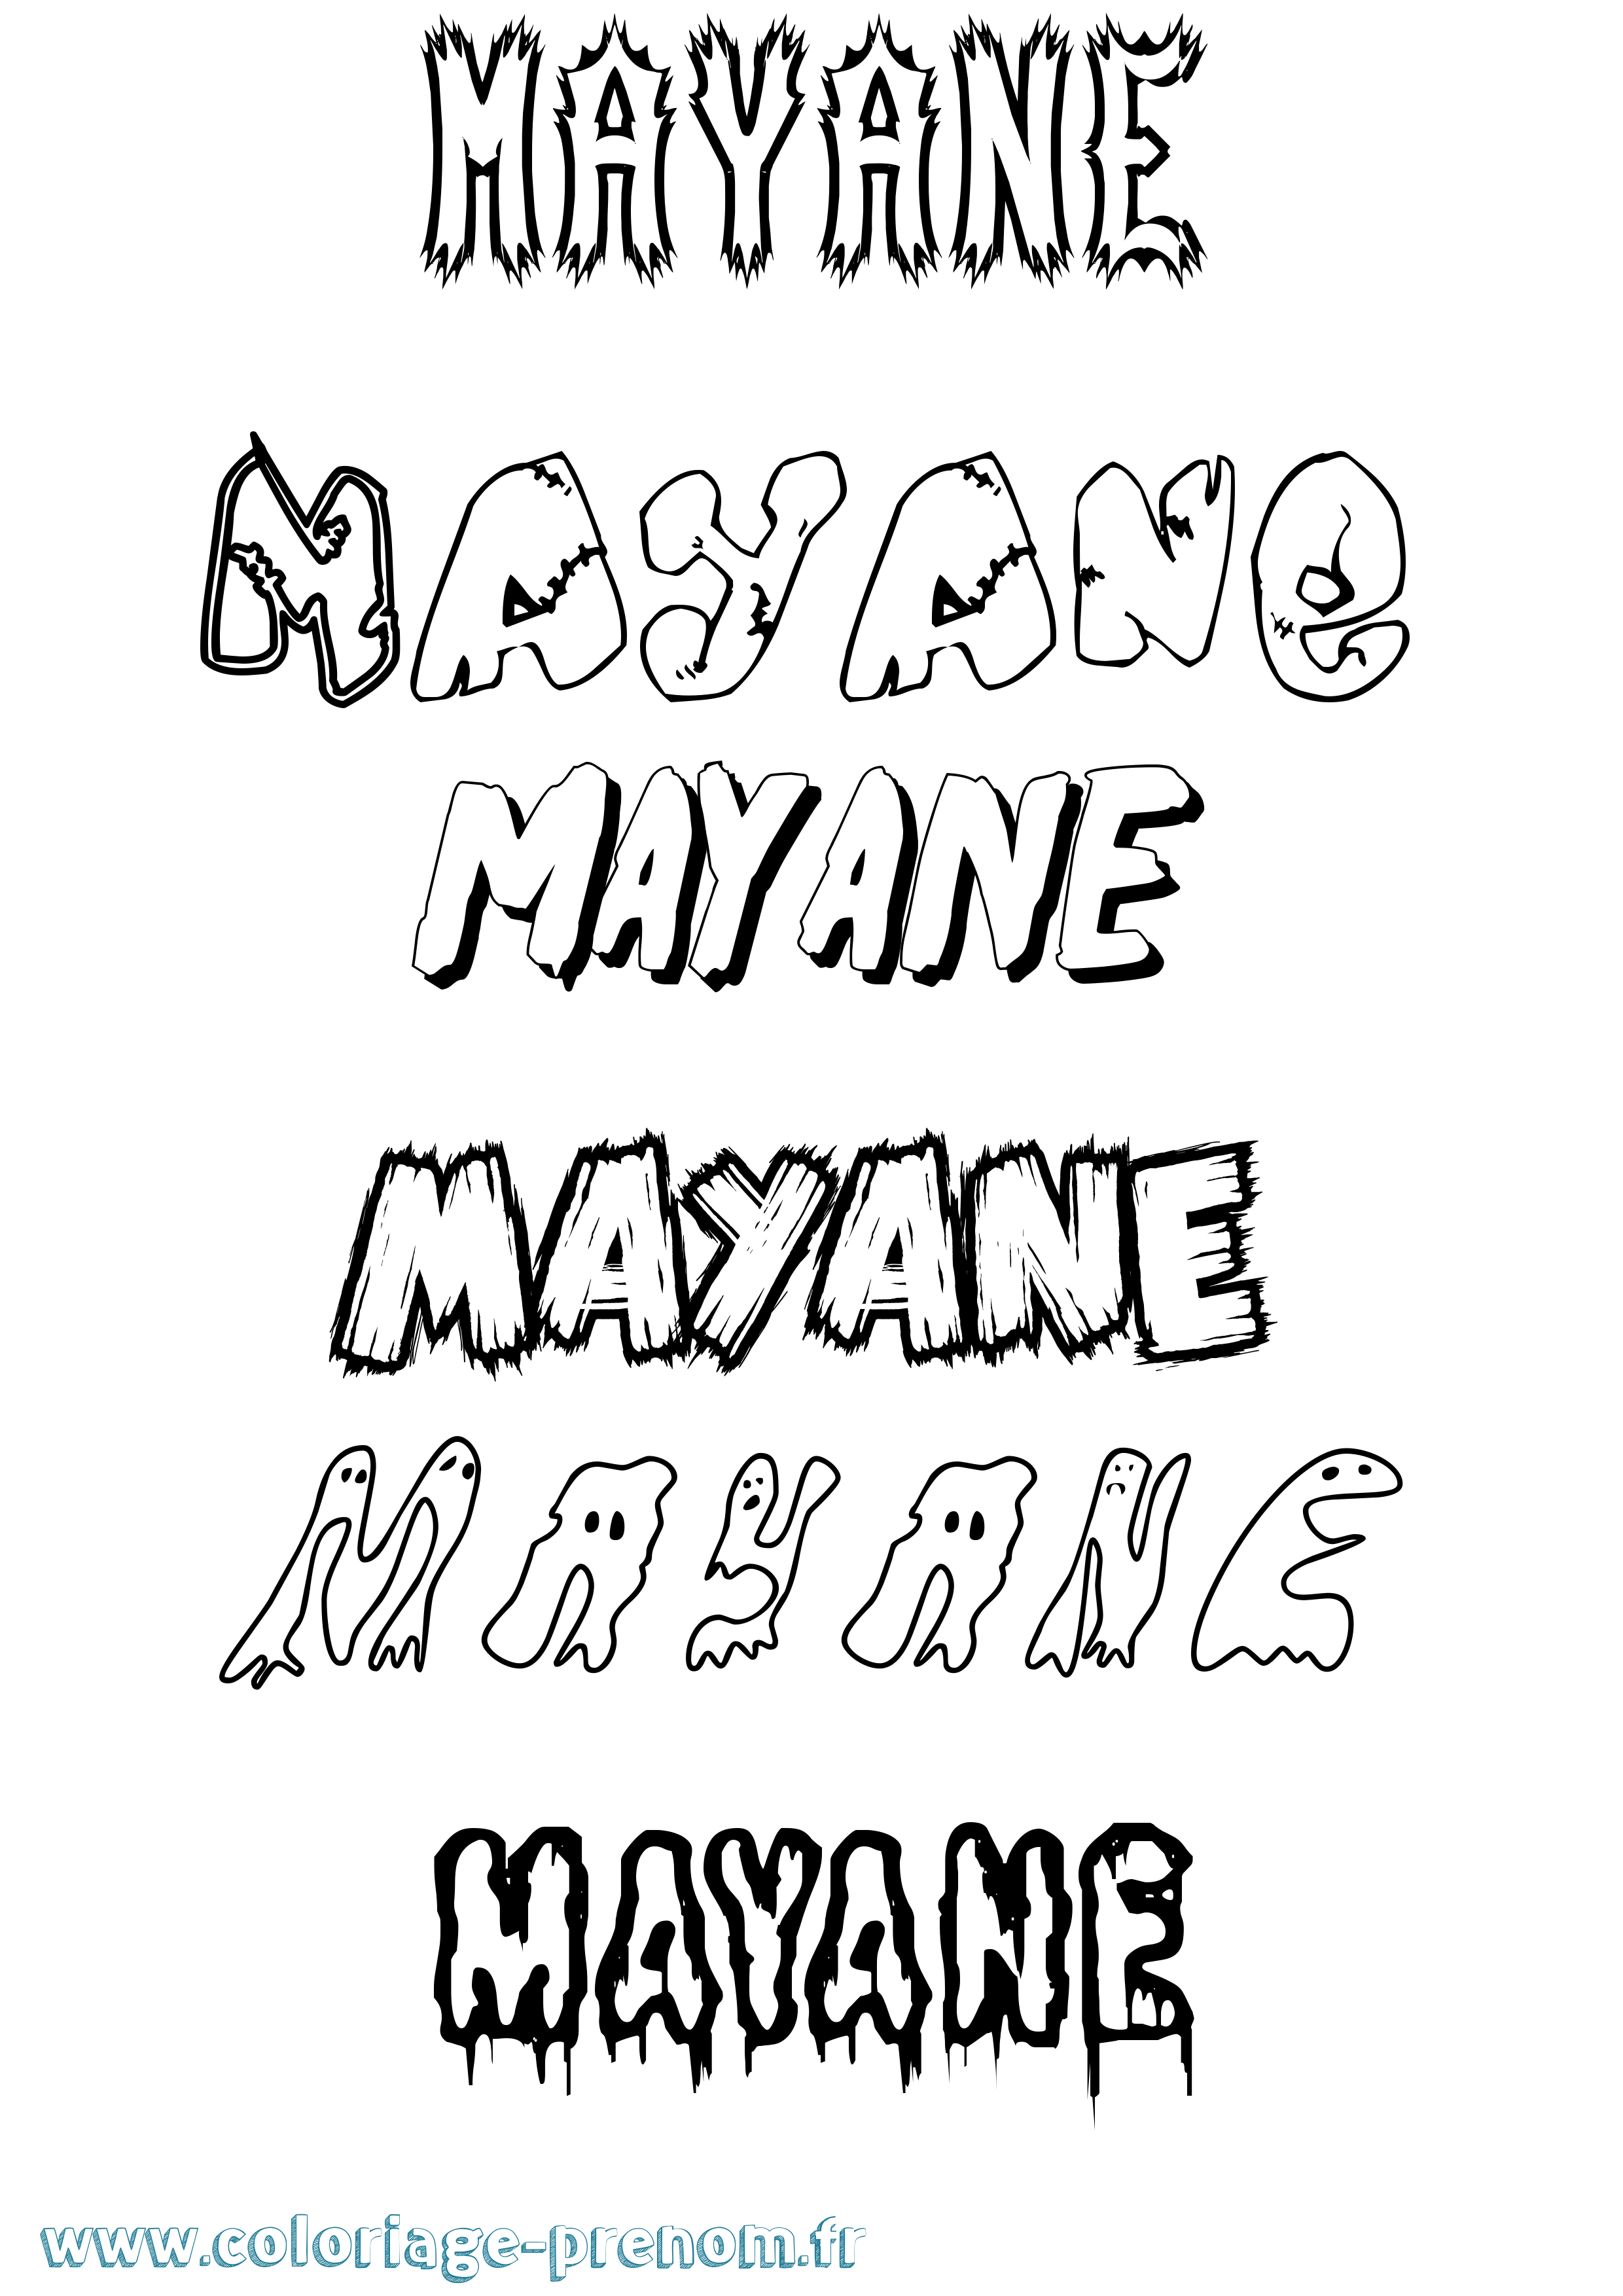 Coloriage prénom Mayane